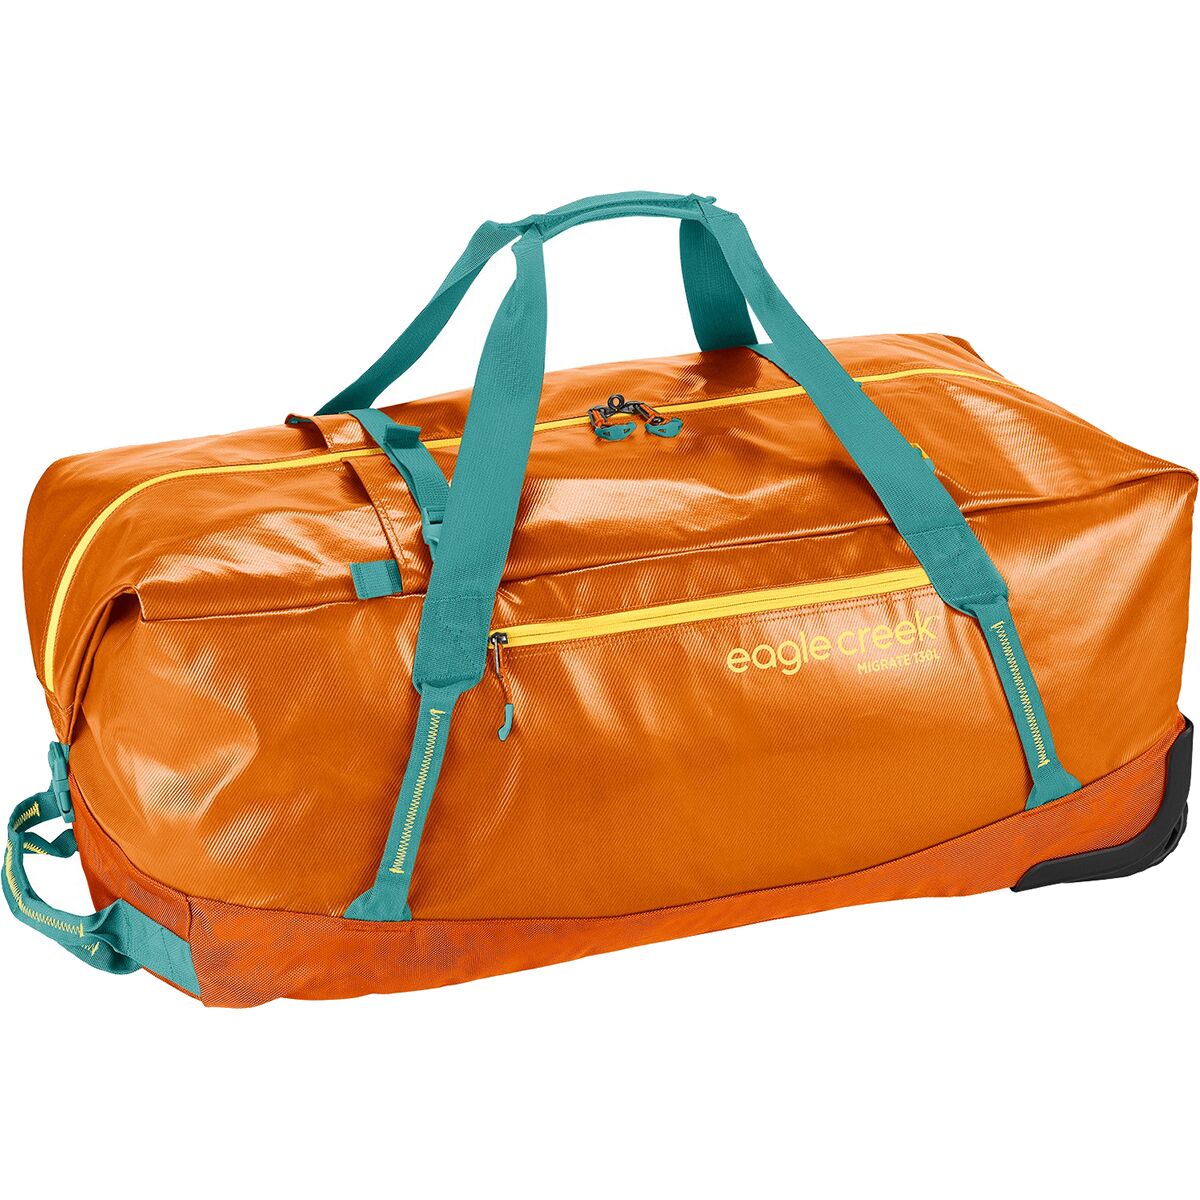 Migrate 130L Wheeled Duffel Bag